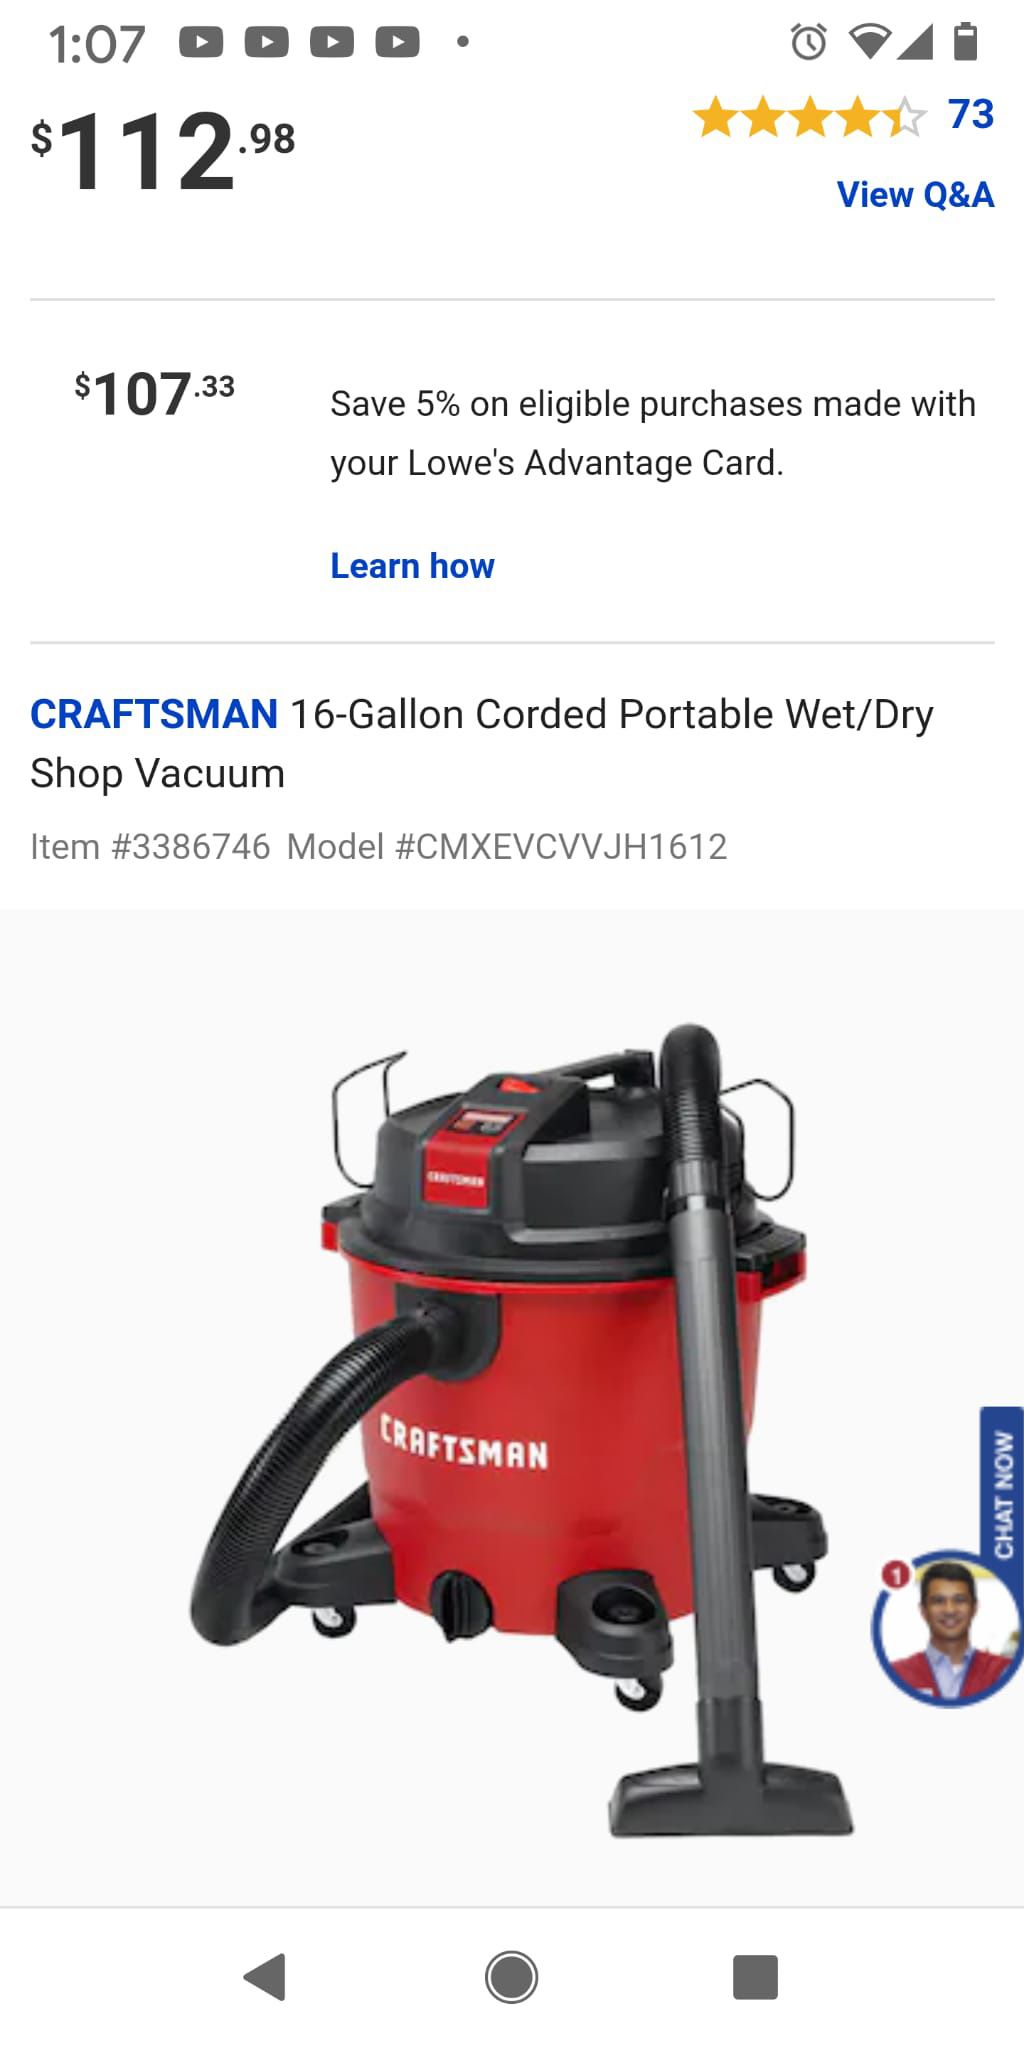 CRAFTSMAN 16-Gallon Corded Portable Wet/Dry Shop Vacuum

